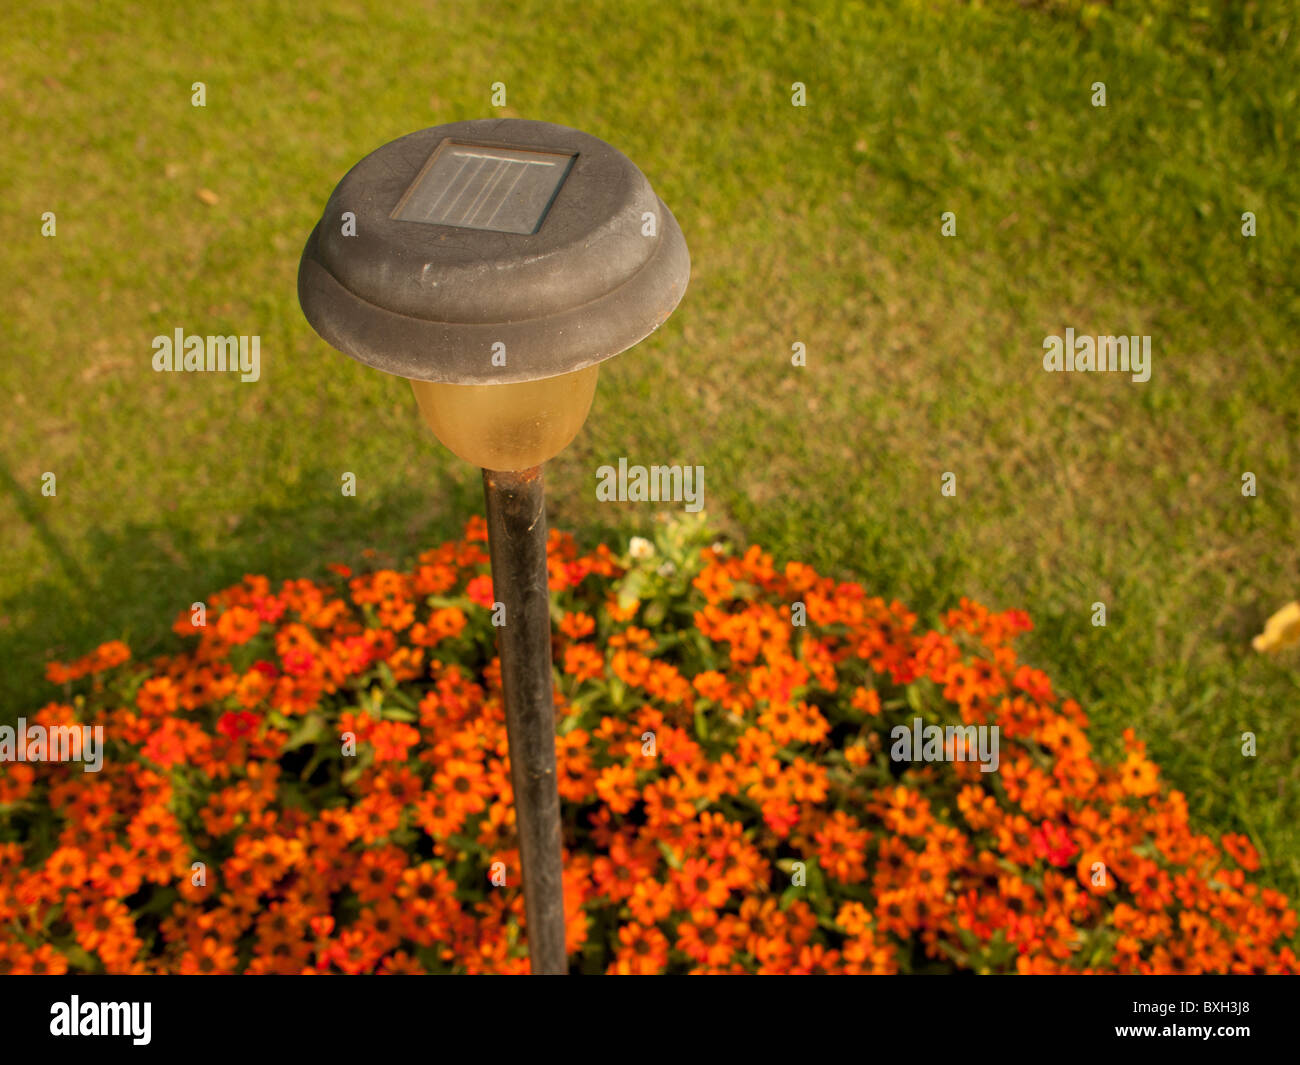 Solar lawn light or solar garden lighting Stock Photo